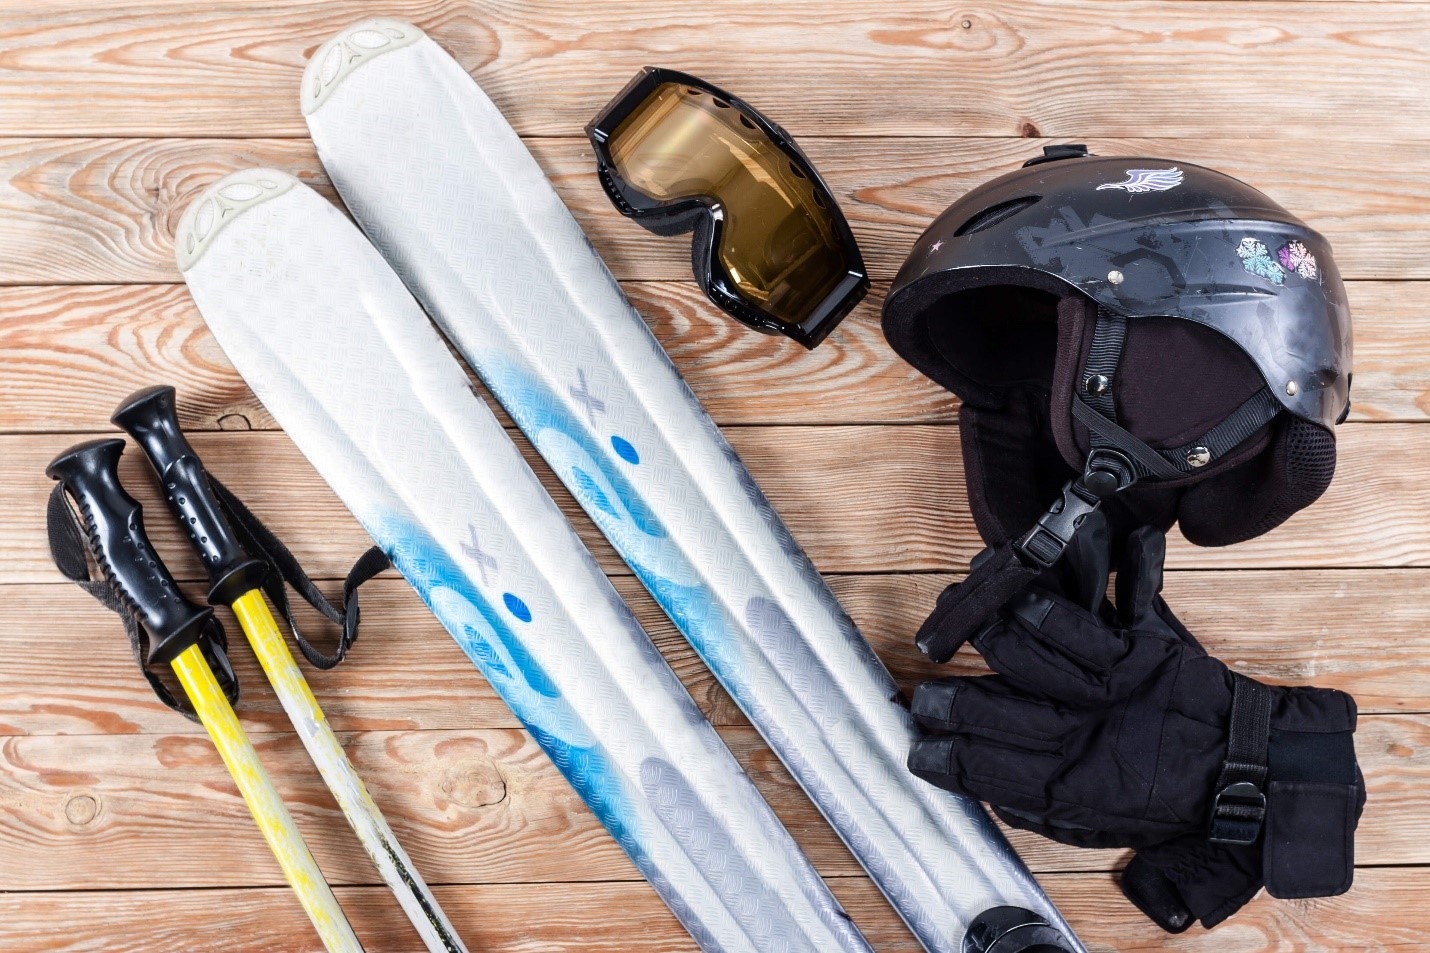 Skiing Gear: Essential Equipment